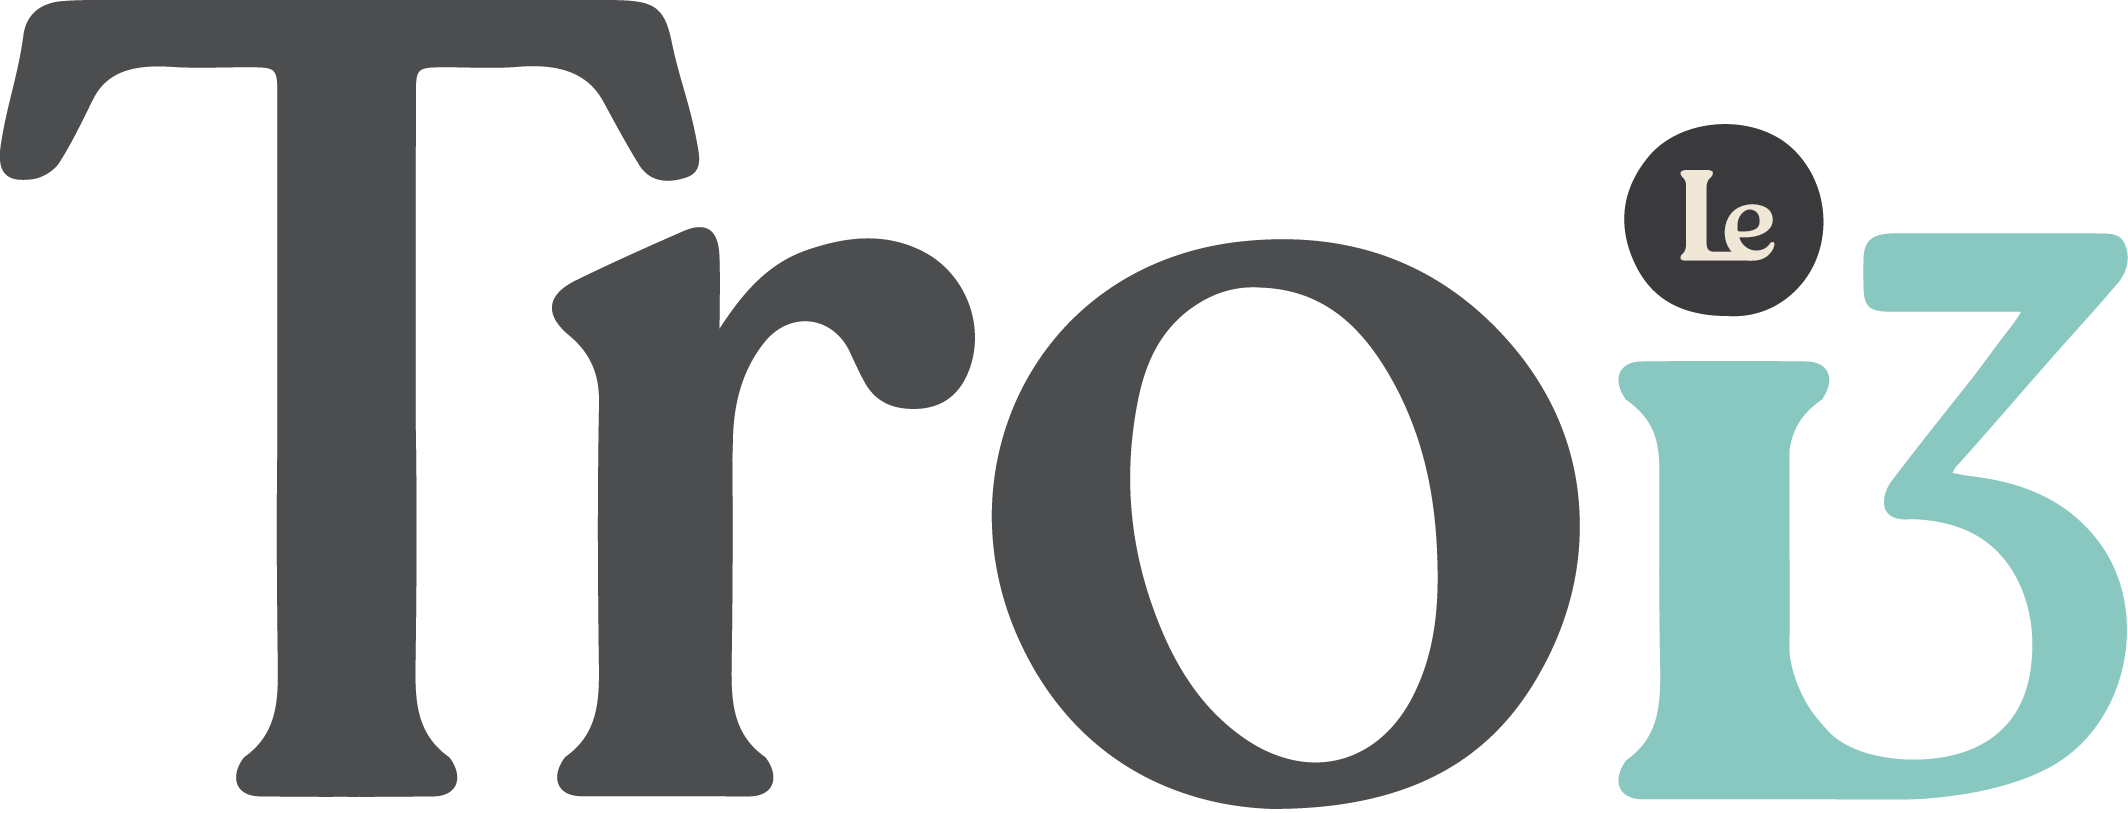 logo letrois.info